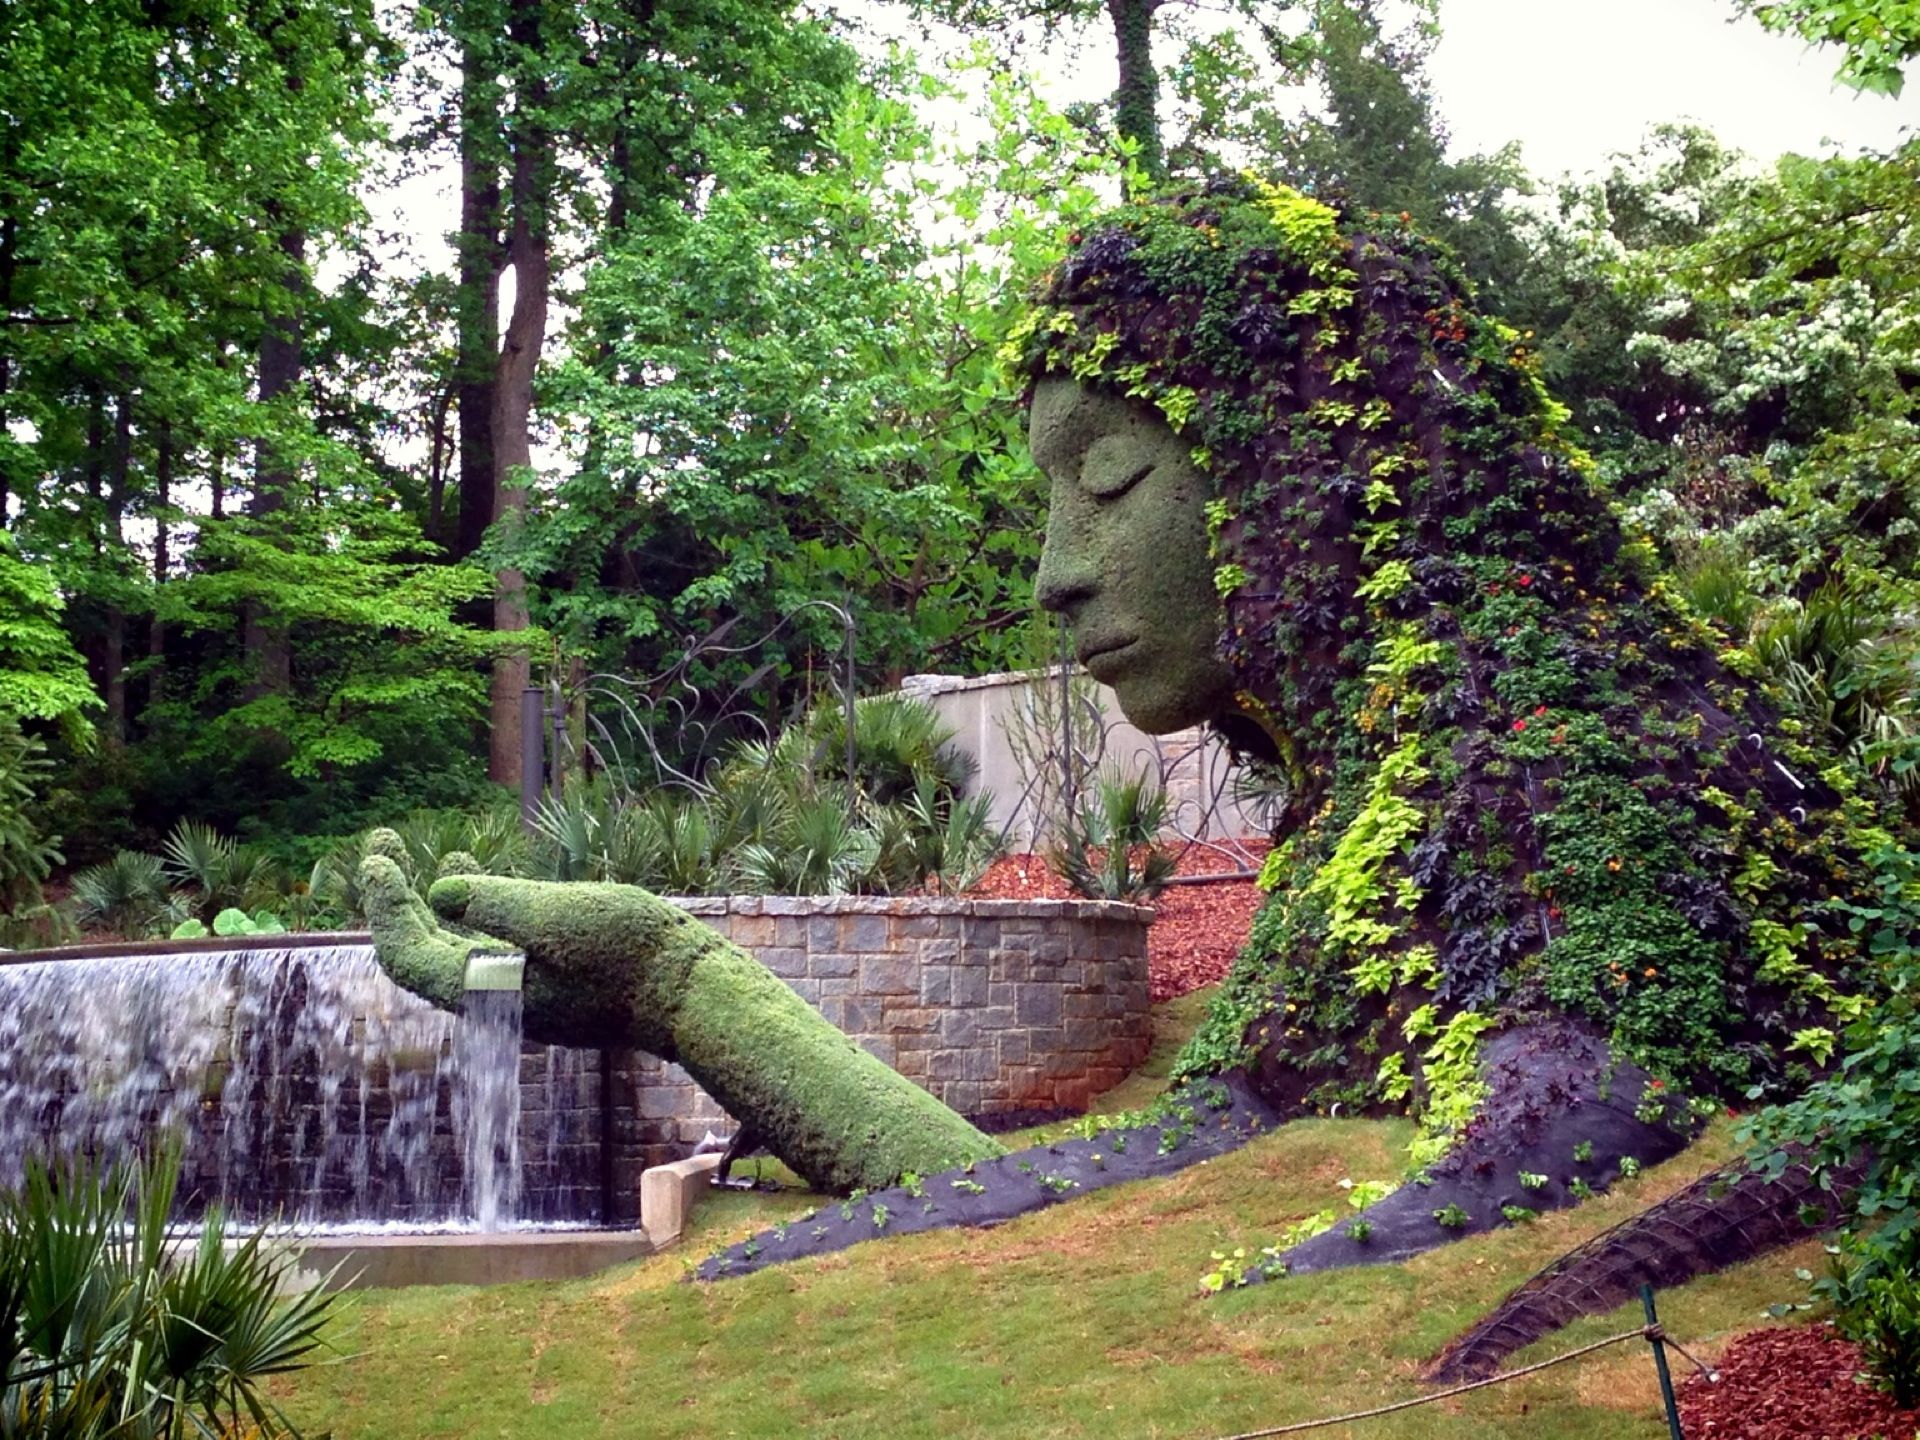 The Atlanta Botanical Gardens